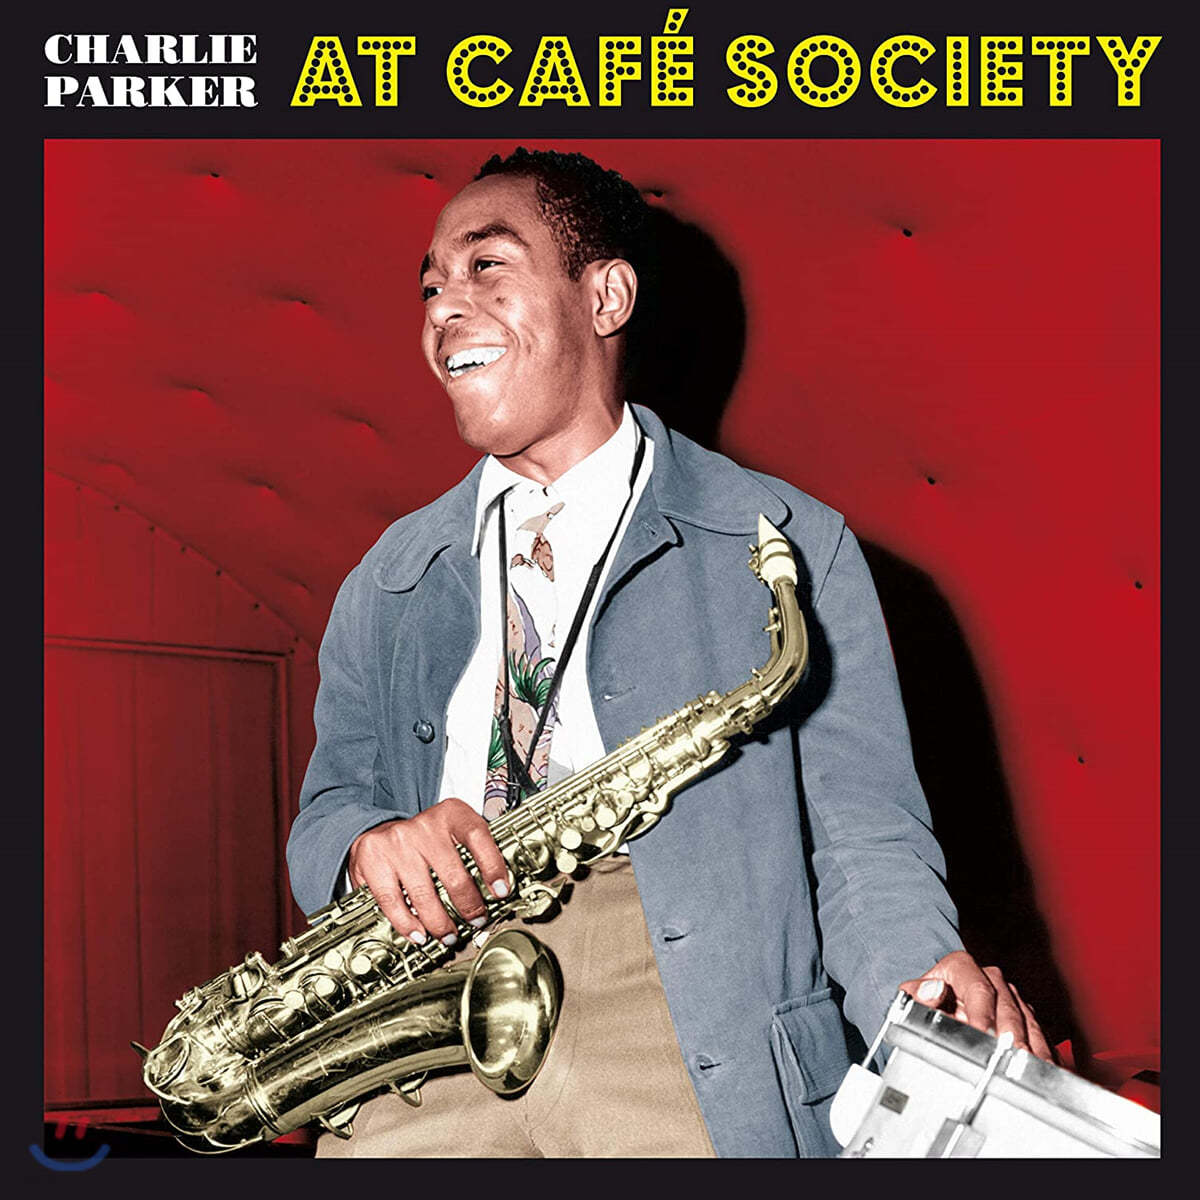 Charlie Parker (찰리 파커) - At Cafe Society [레드 컬러 LP]  